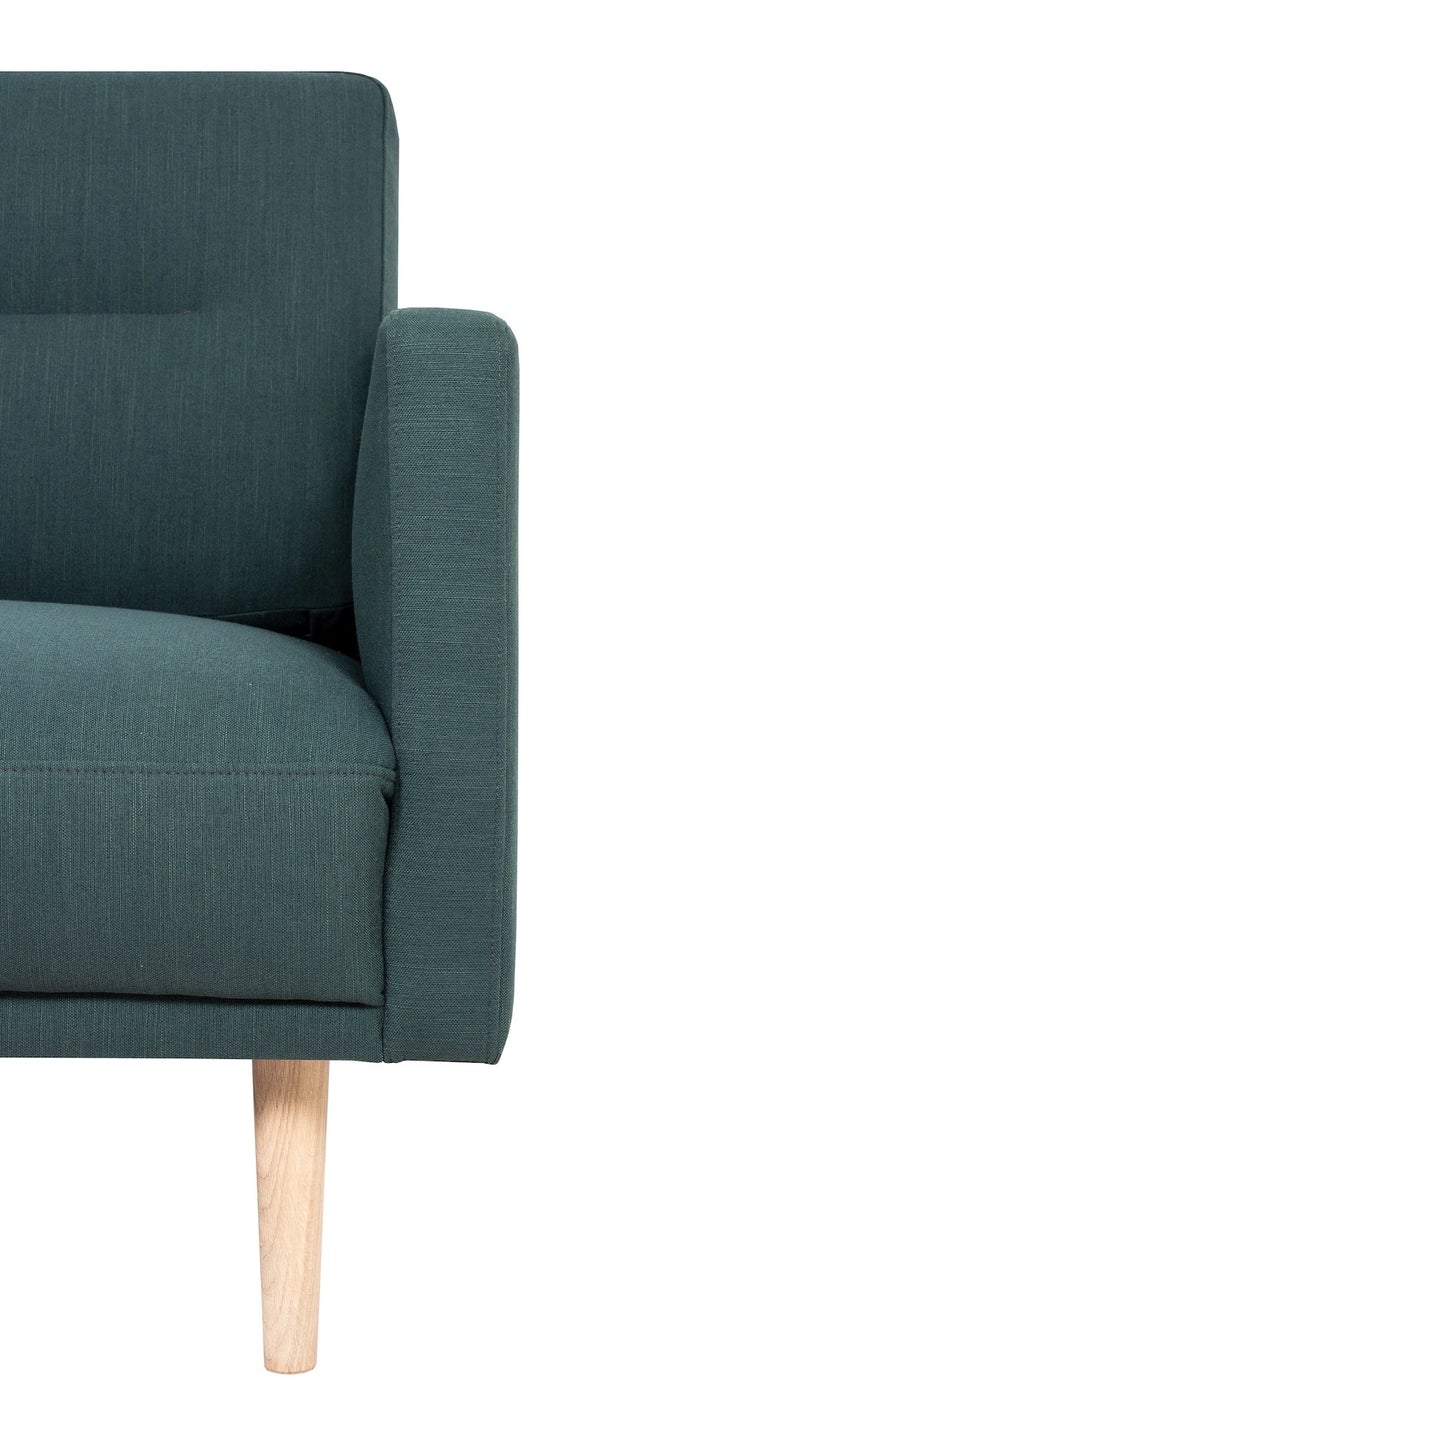 Furniture To Go Larvik 3 Seater Sofa - Dark Green, Oak Legs